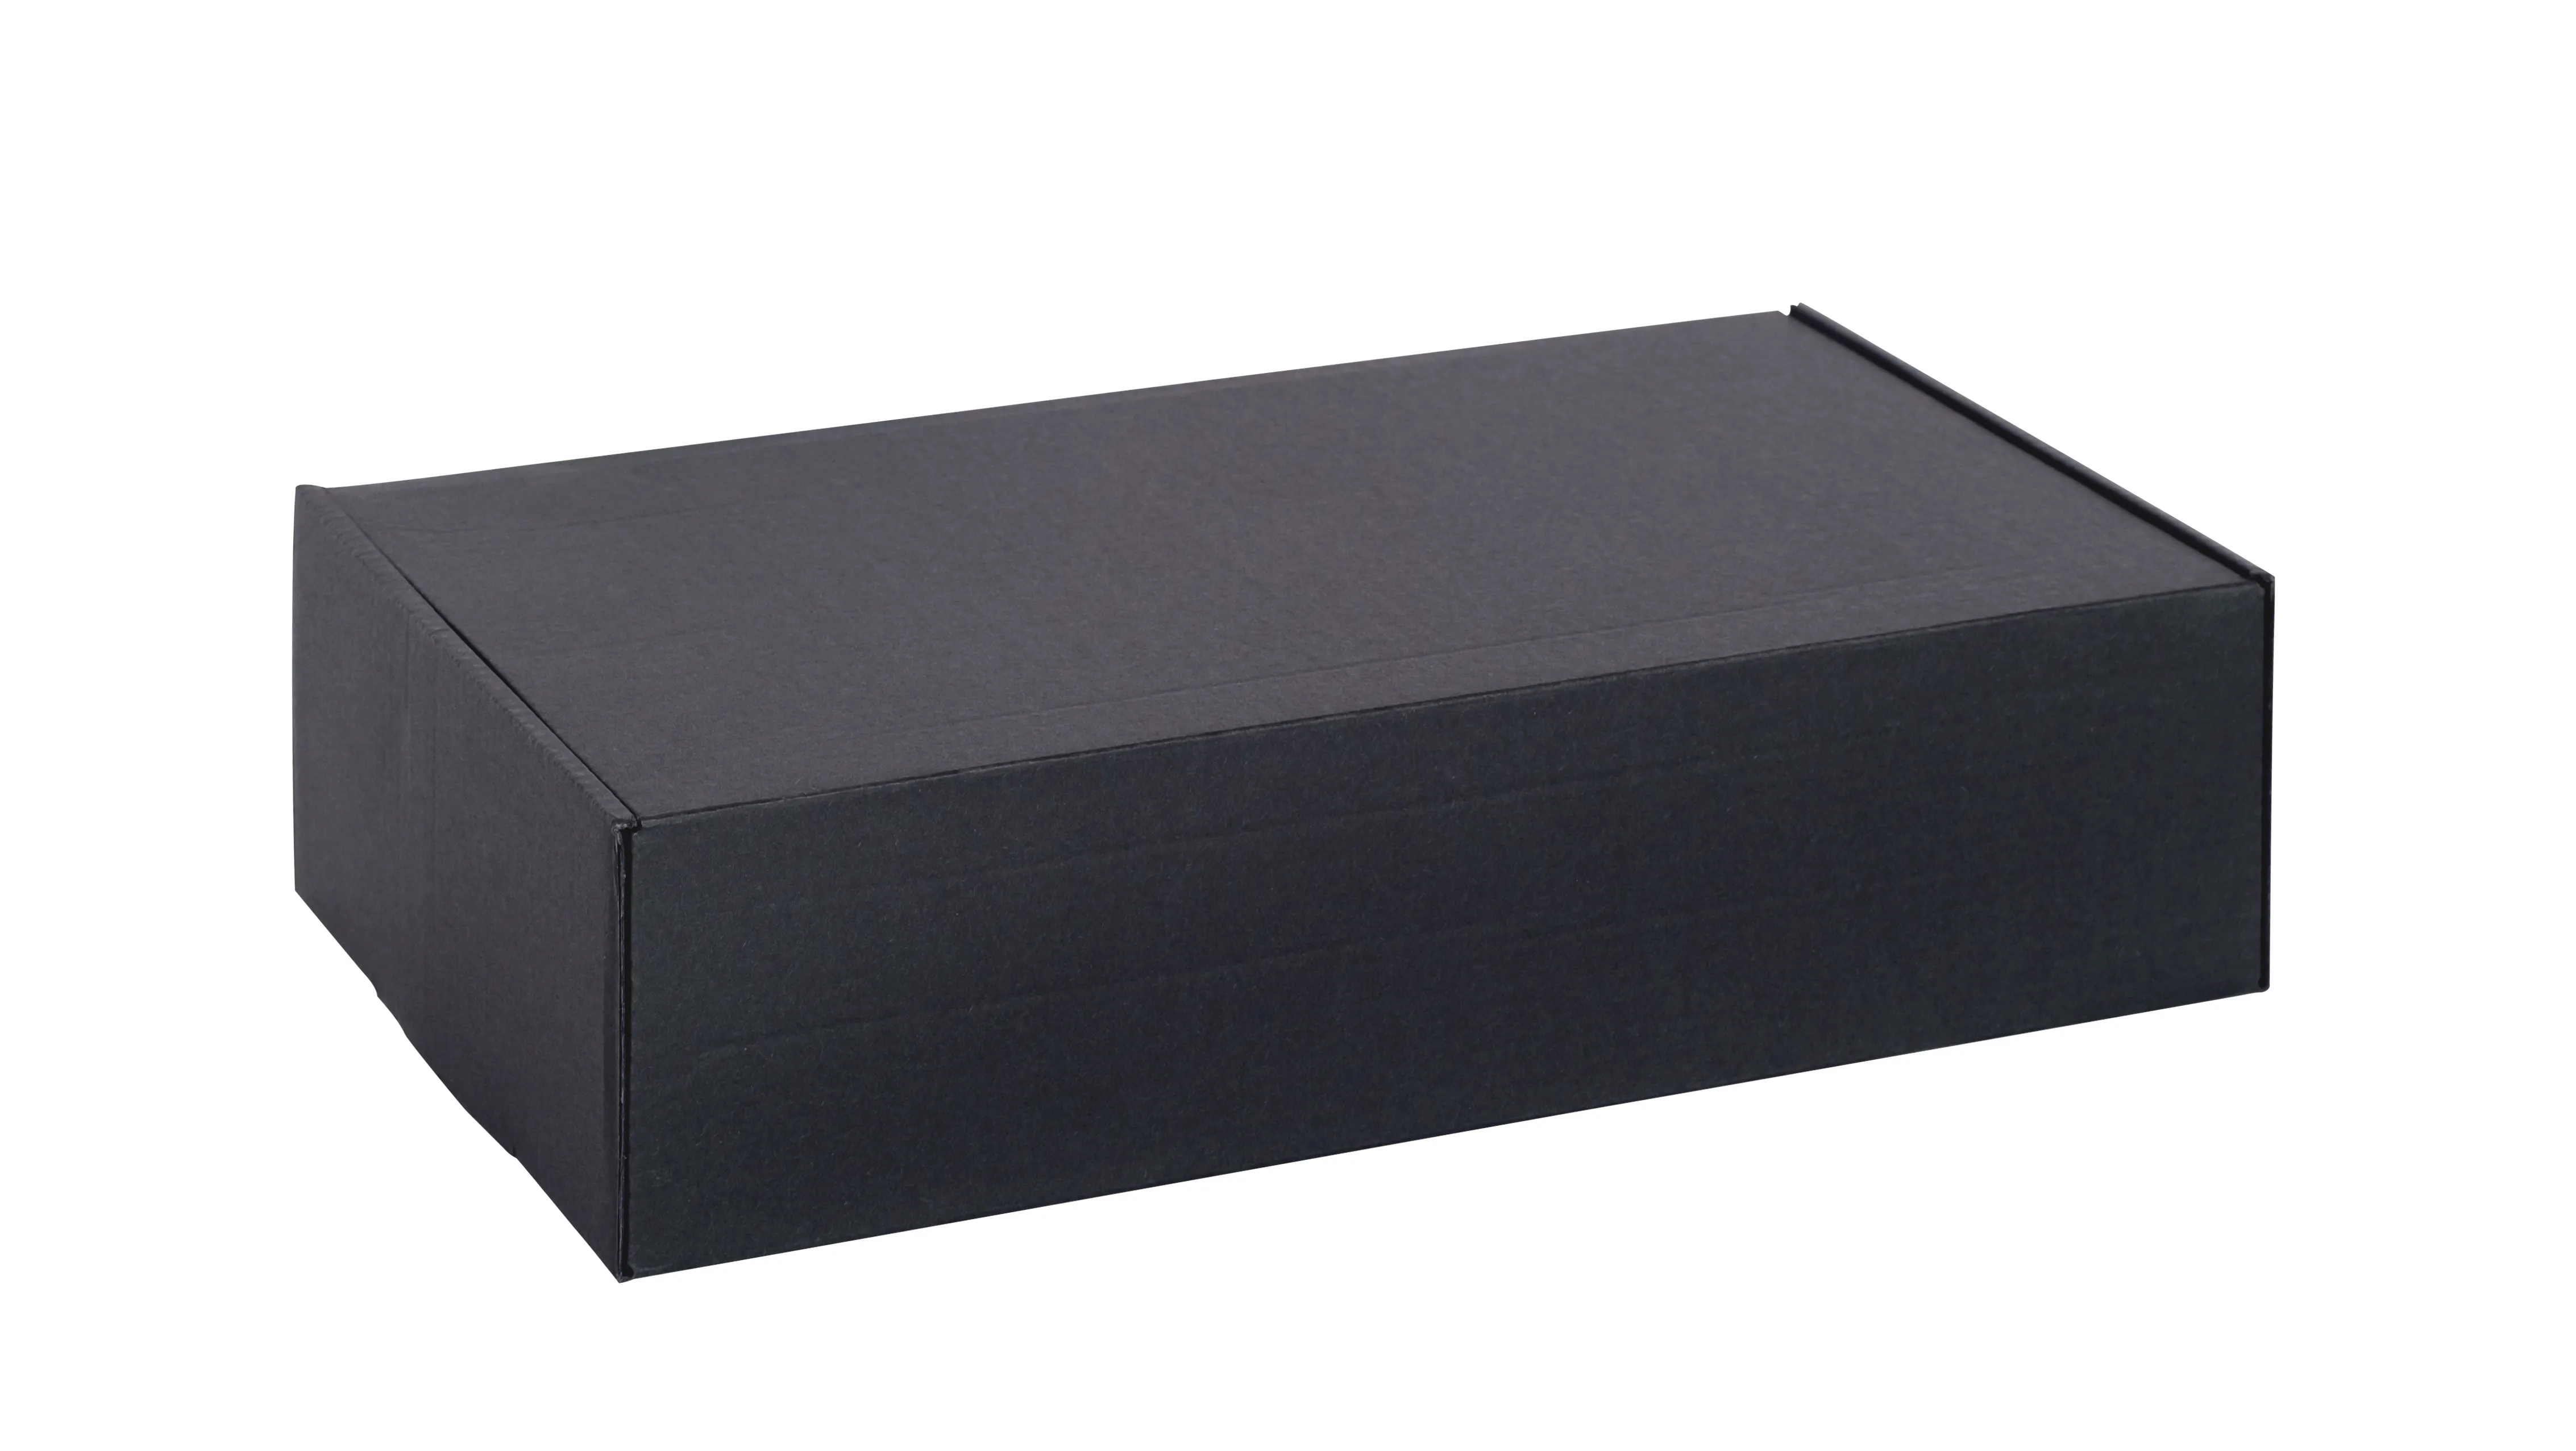 a black box